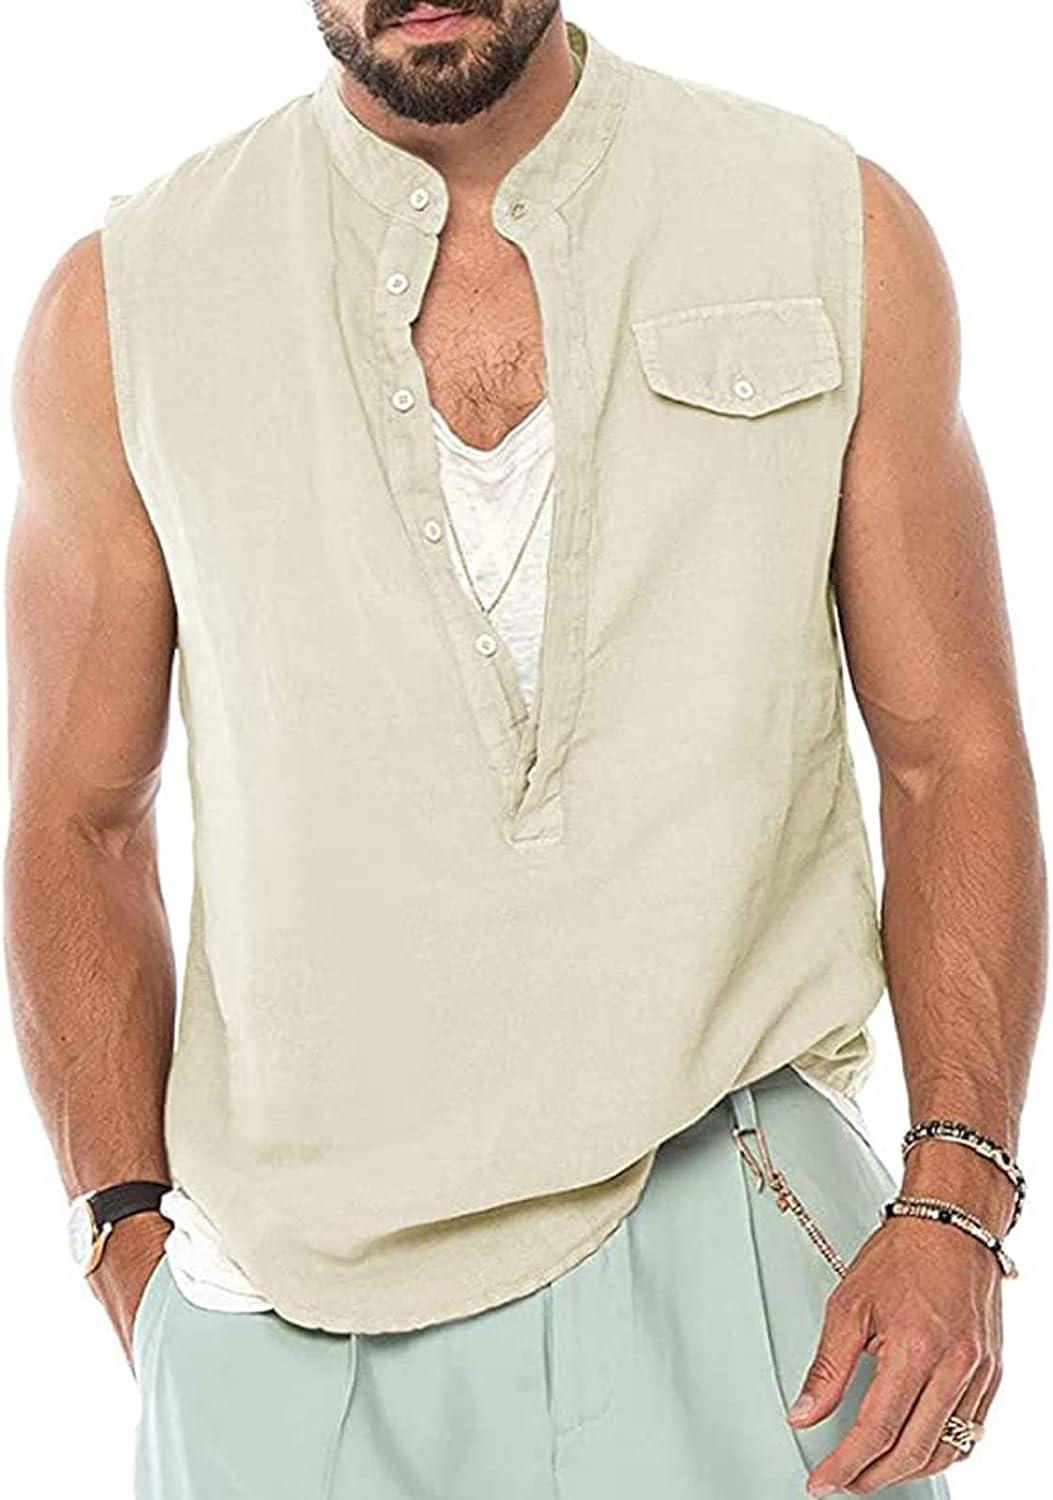 Men Top Fashion Spring Summer Casual Sleeveless Tank T Shirts Men Loose  Vest Tee